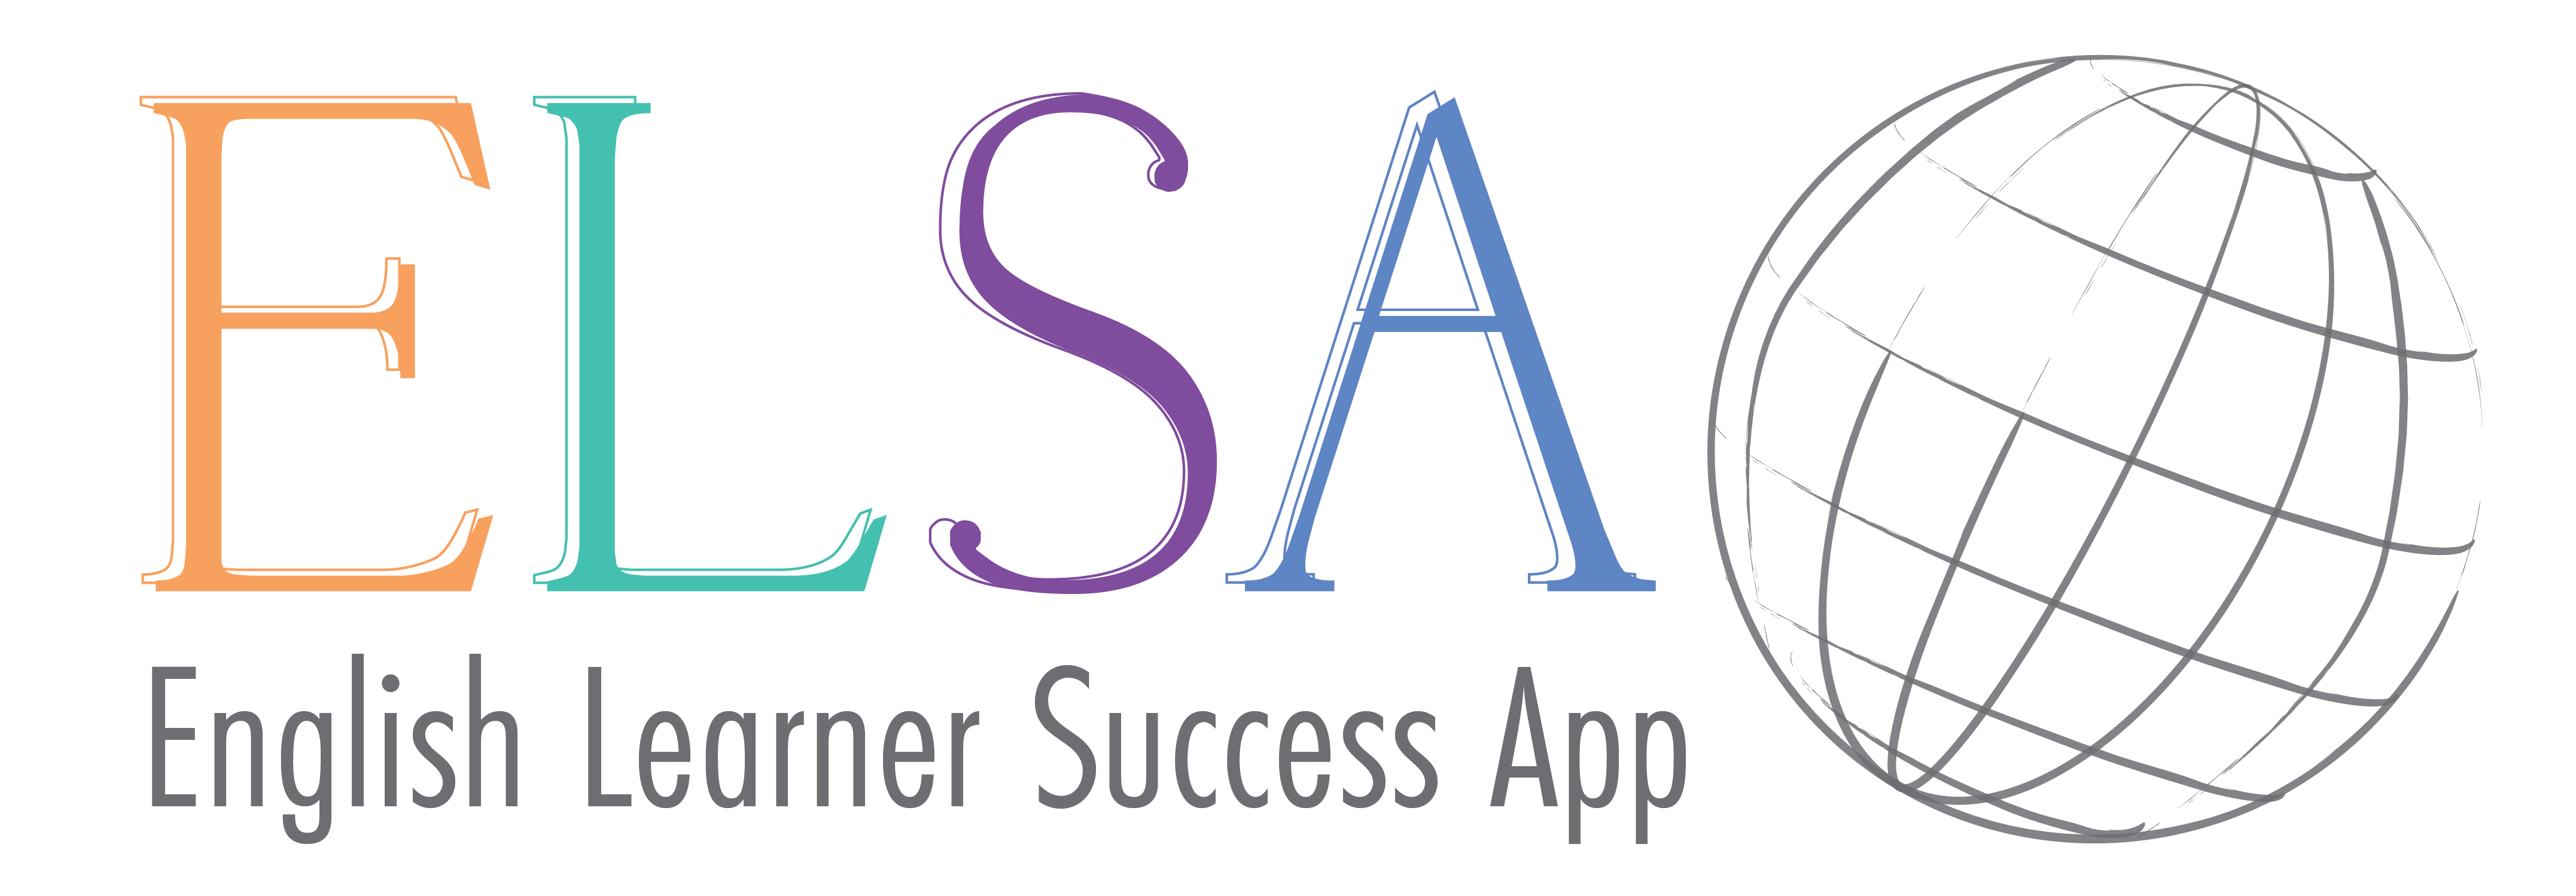 ELSA: English Learner Success App